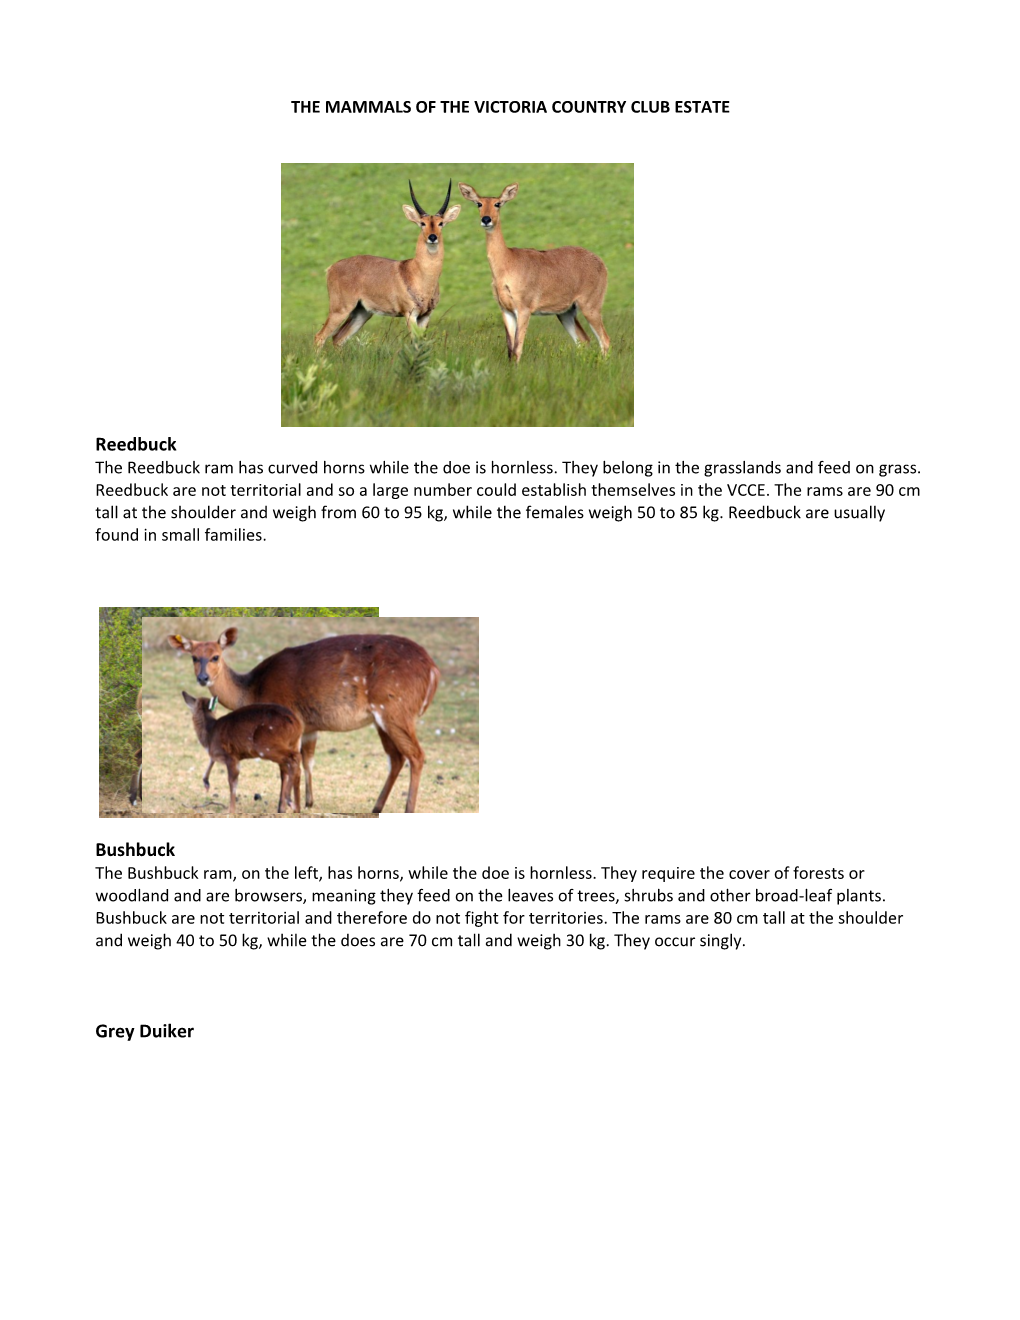 The Mammals of the Victoria Country Club Estate